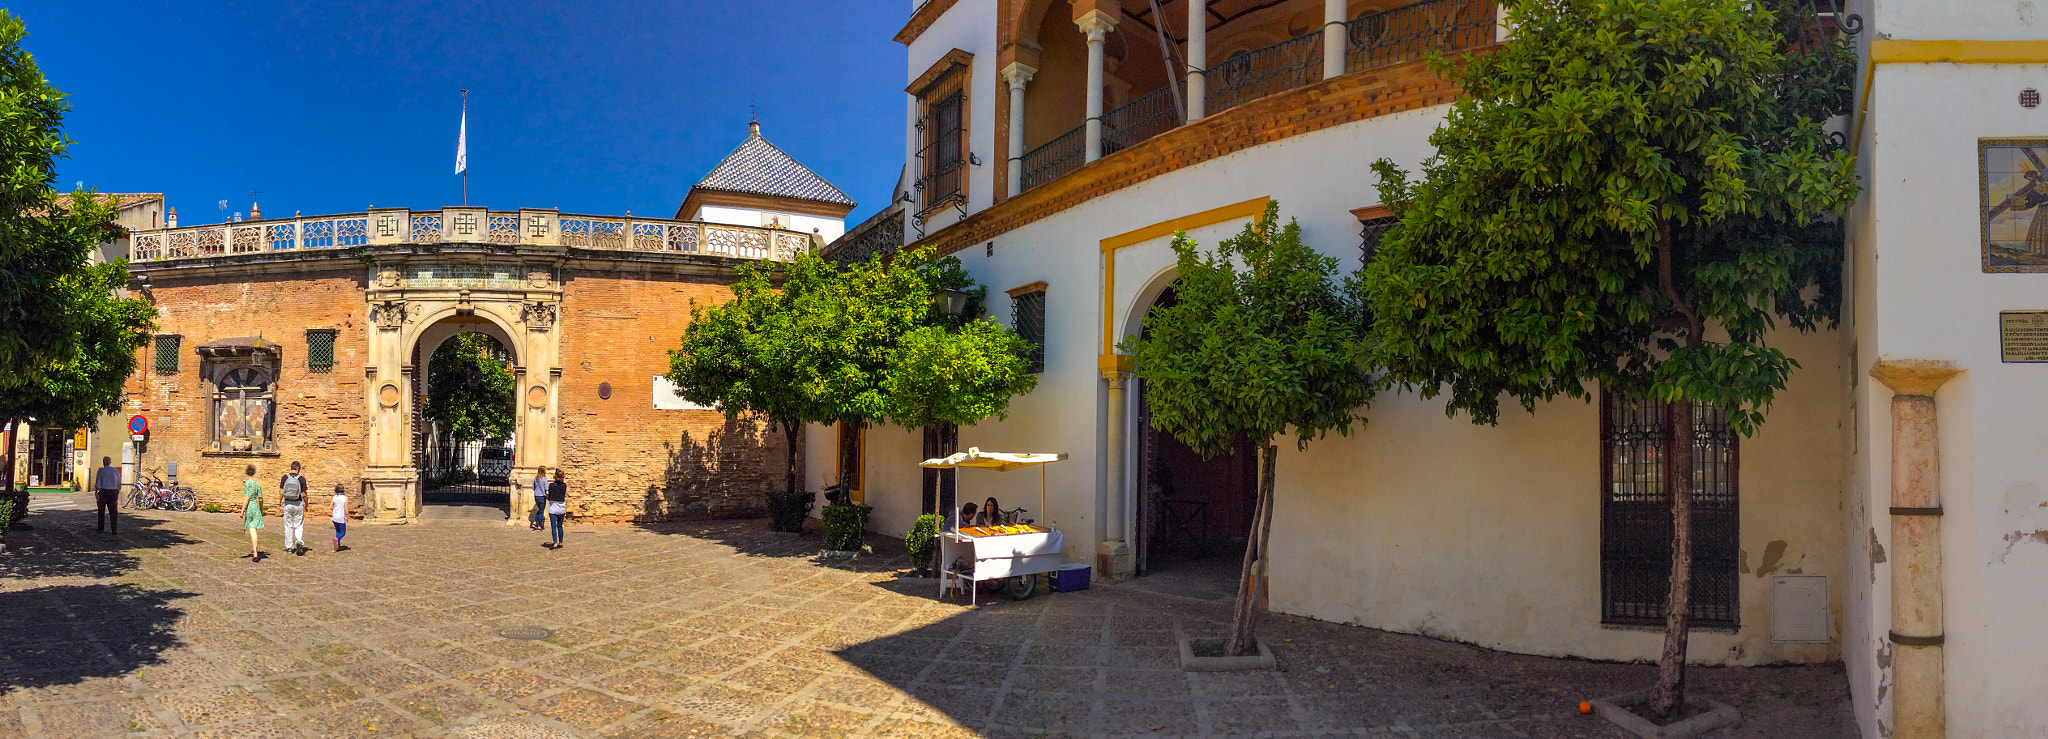 Apple iPad mini 2 sample photo. The front gate of casa de pilatos, seville, spain. photography